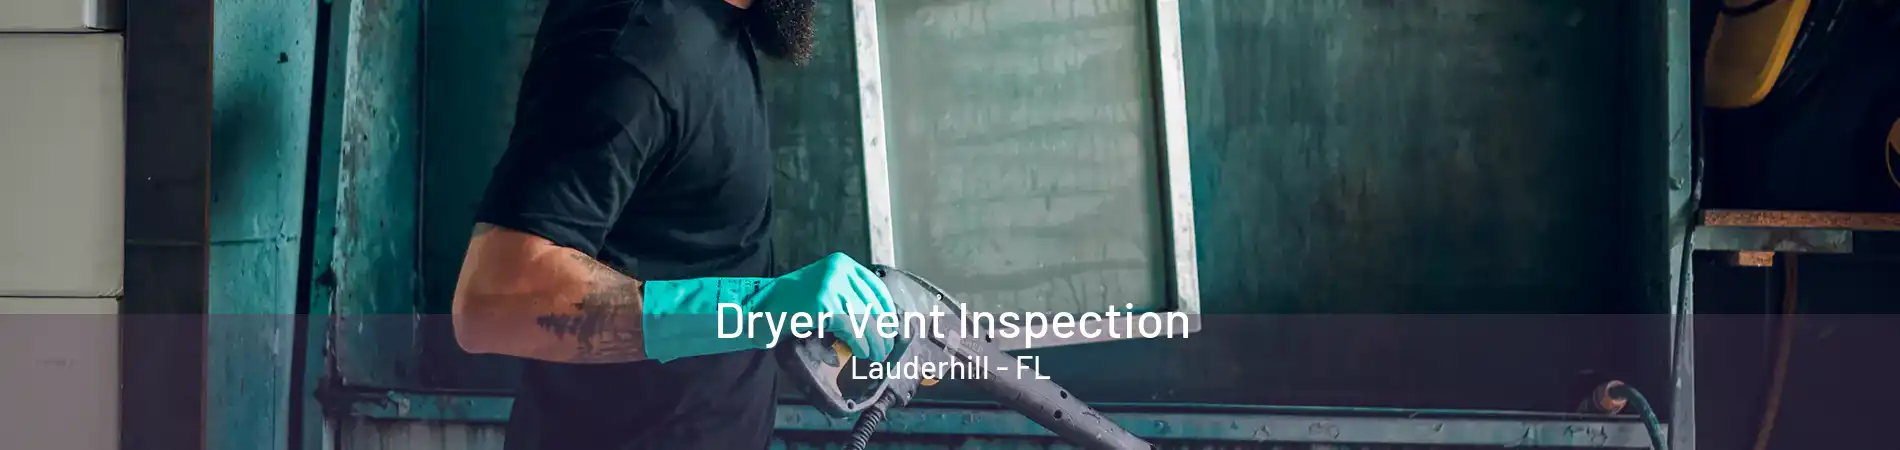 Dryer Vent Inspection Lauderhill - FL